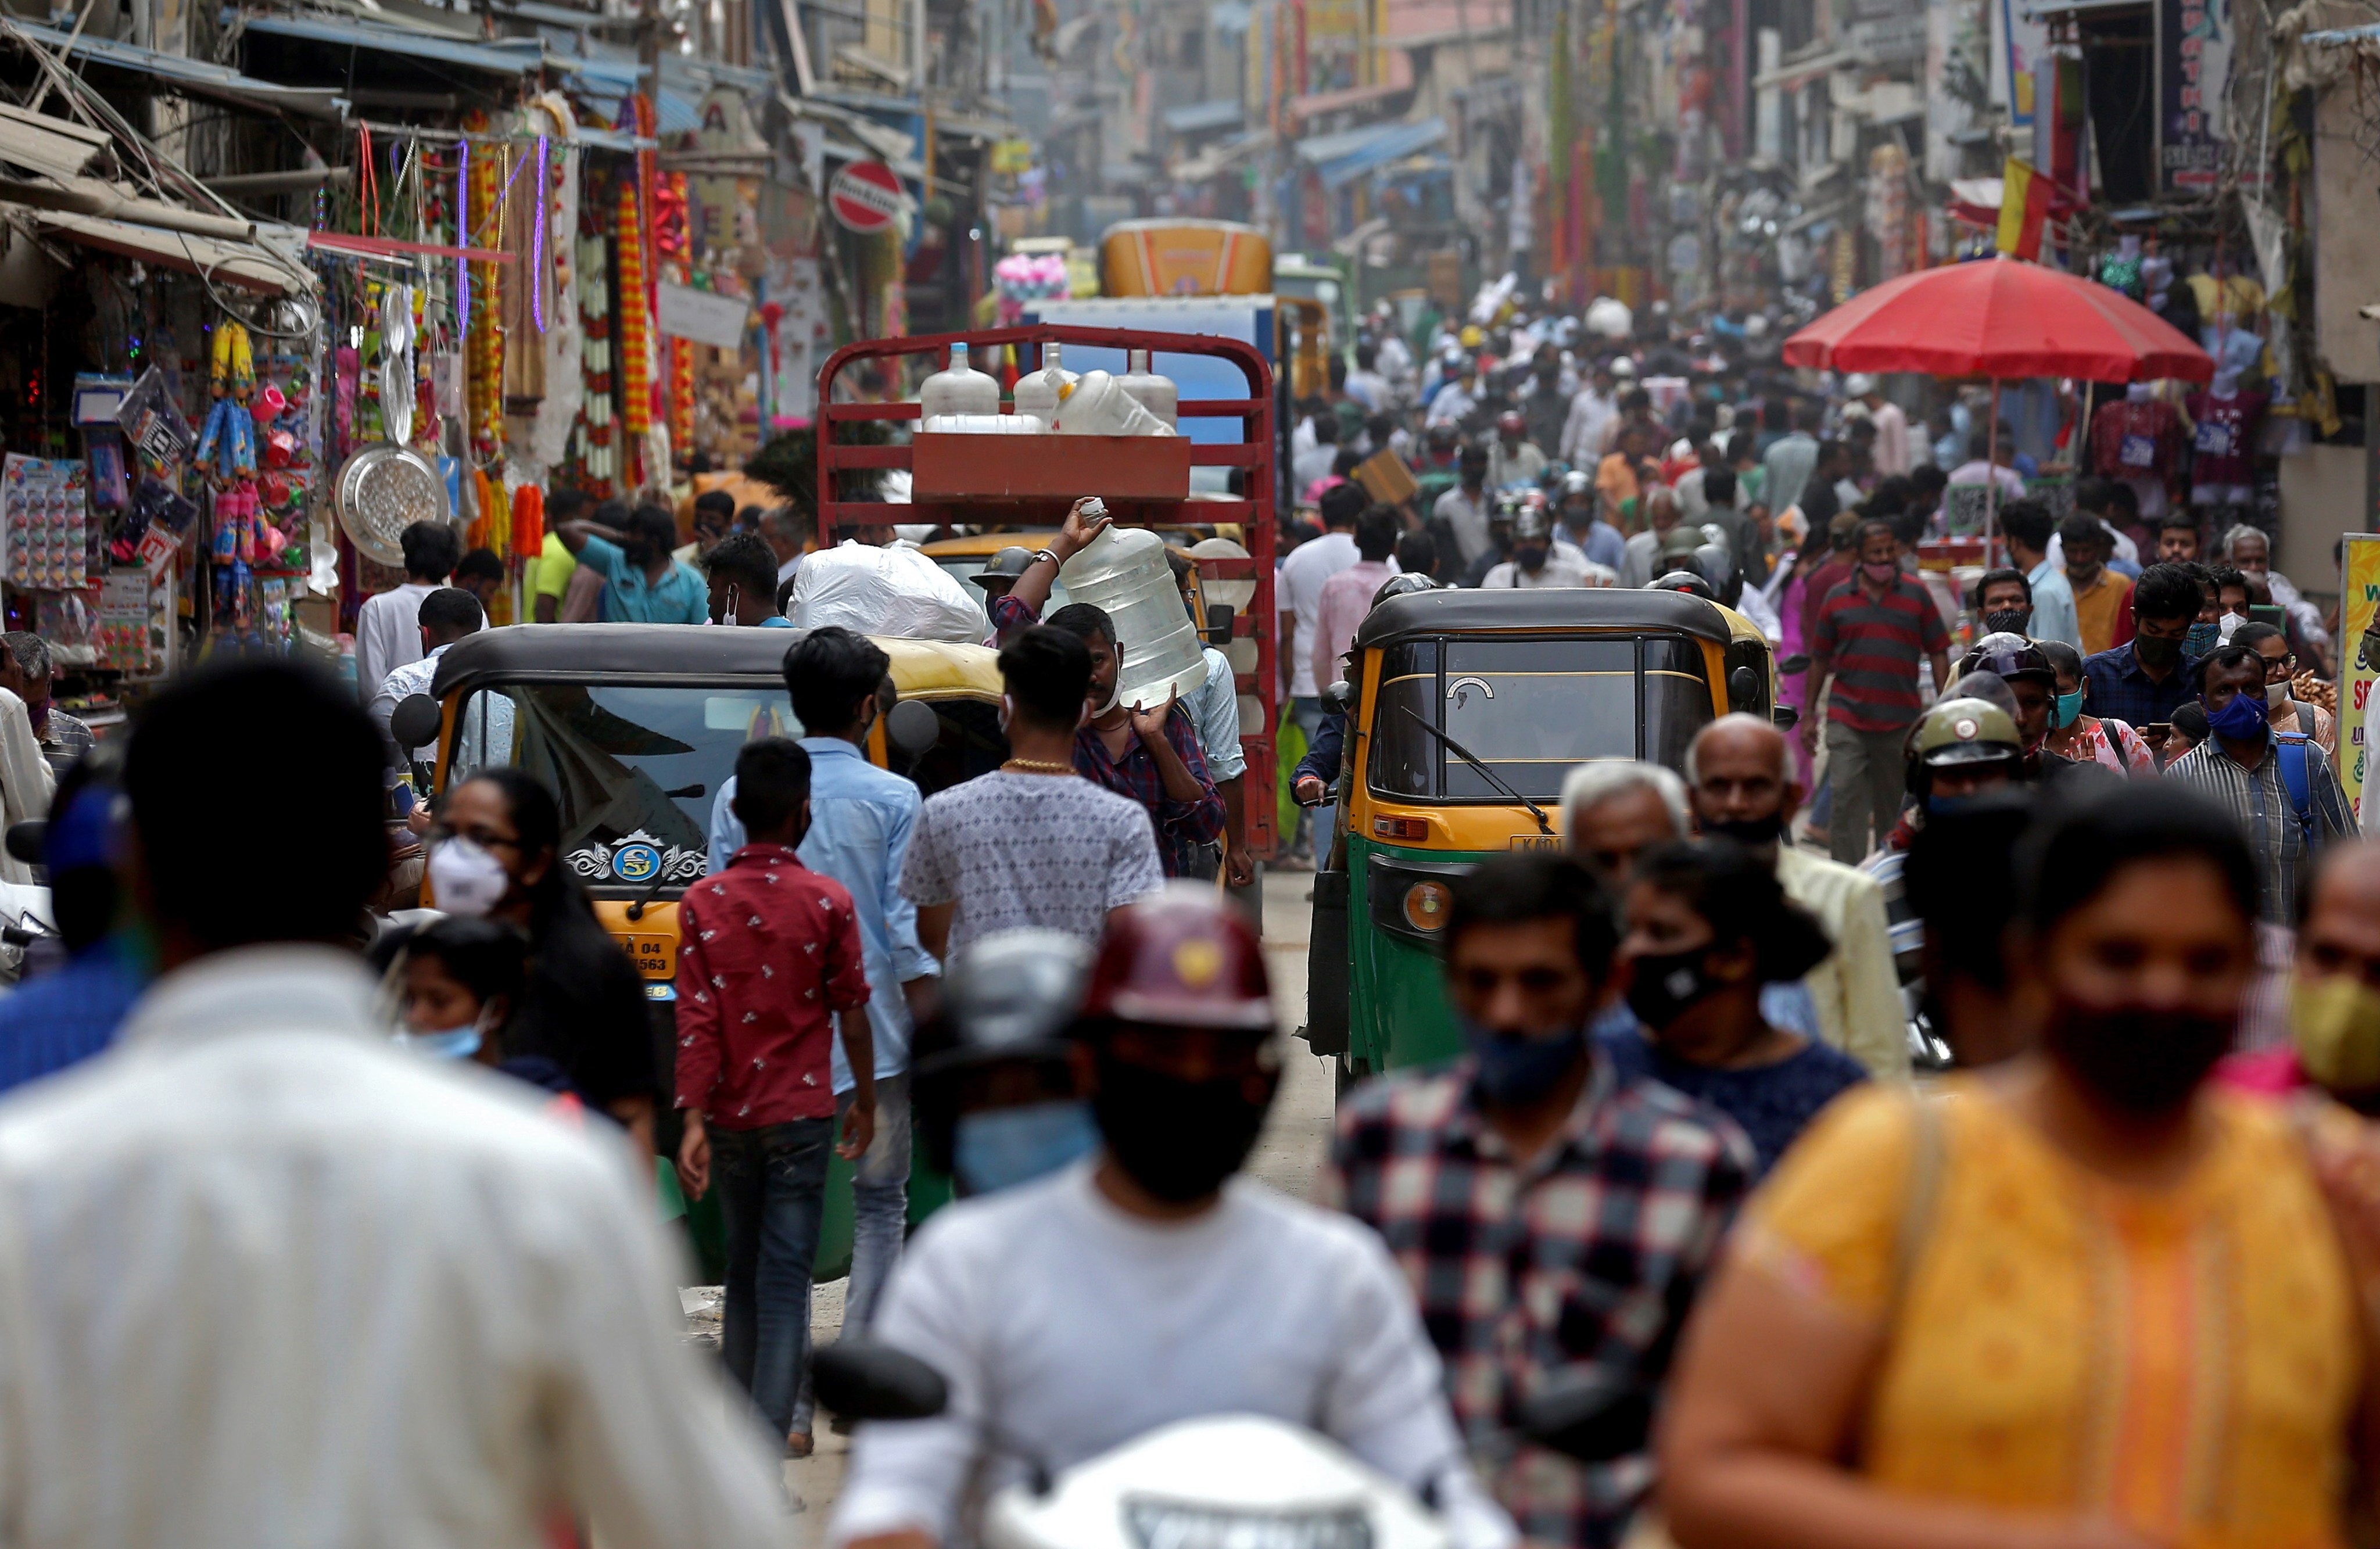 A crowded city market area in Bangalore. Photo: EPA-EFE